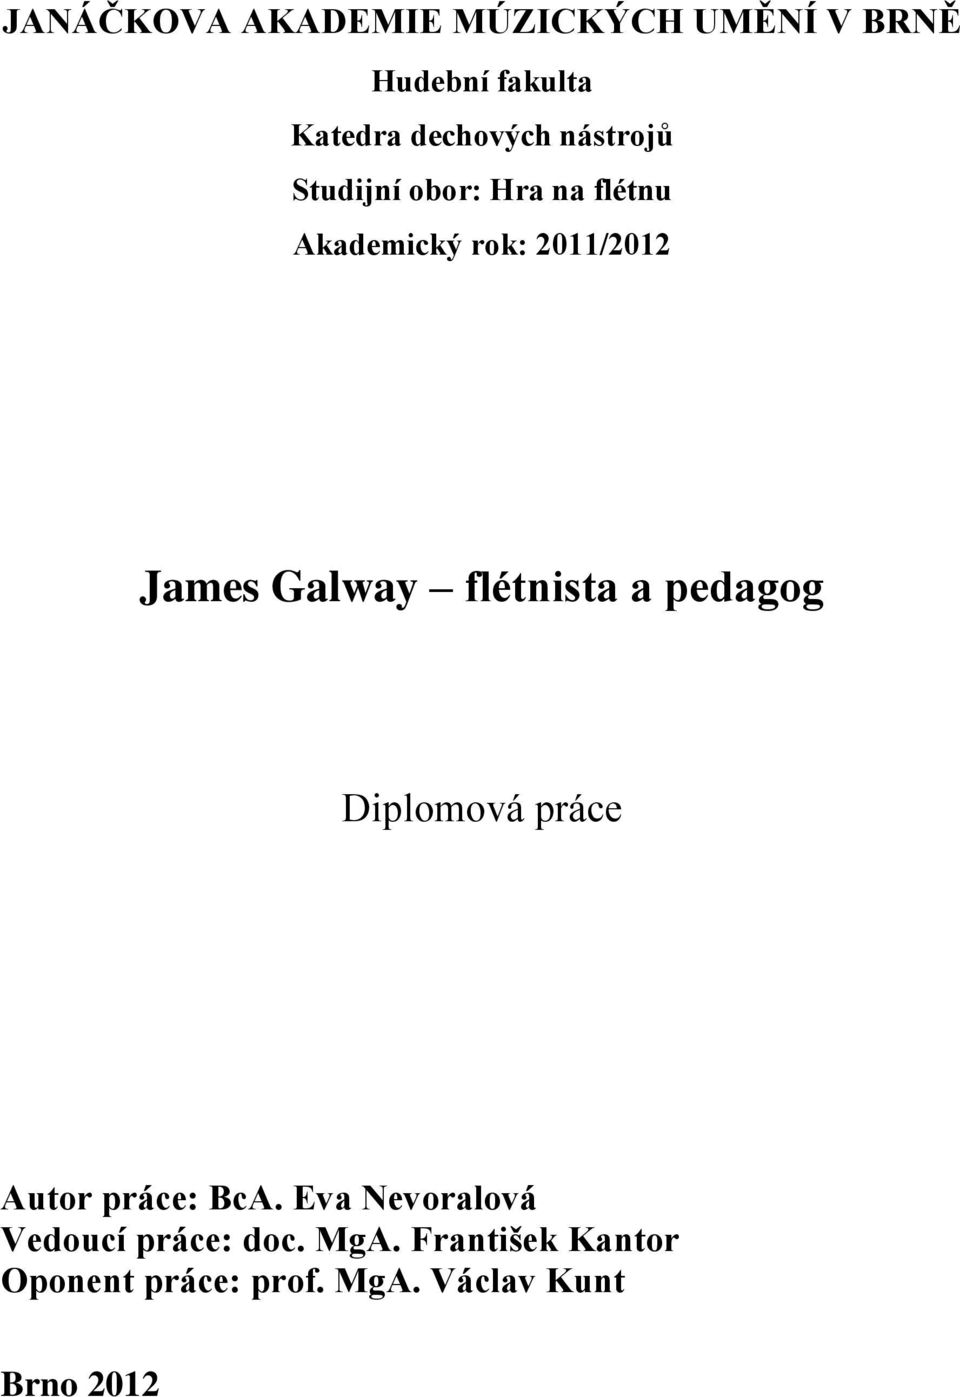 James Galway flétnista a pedagog - PDF Stažení zdarma